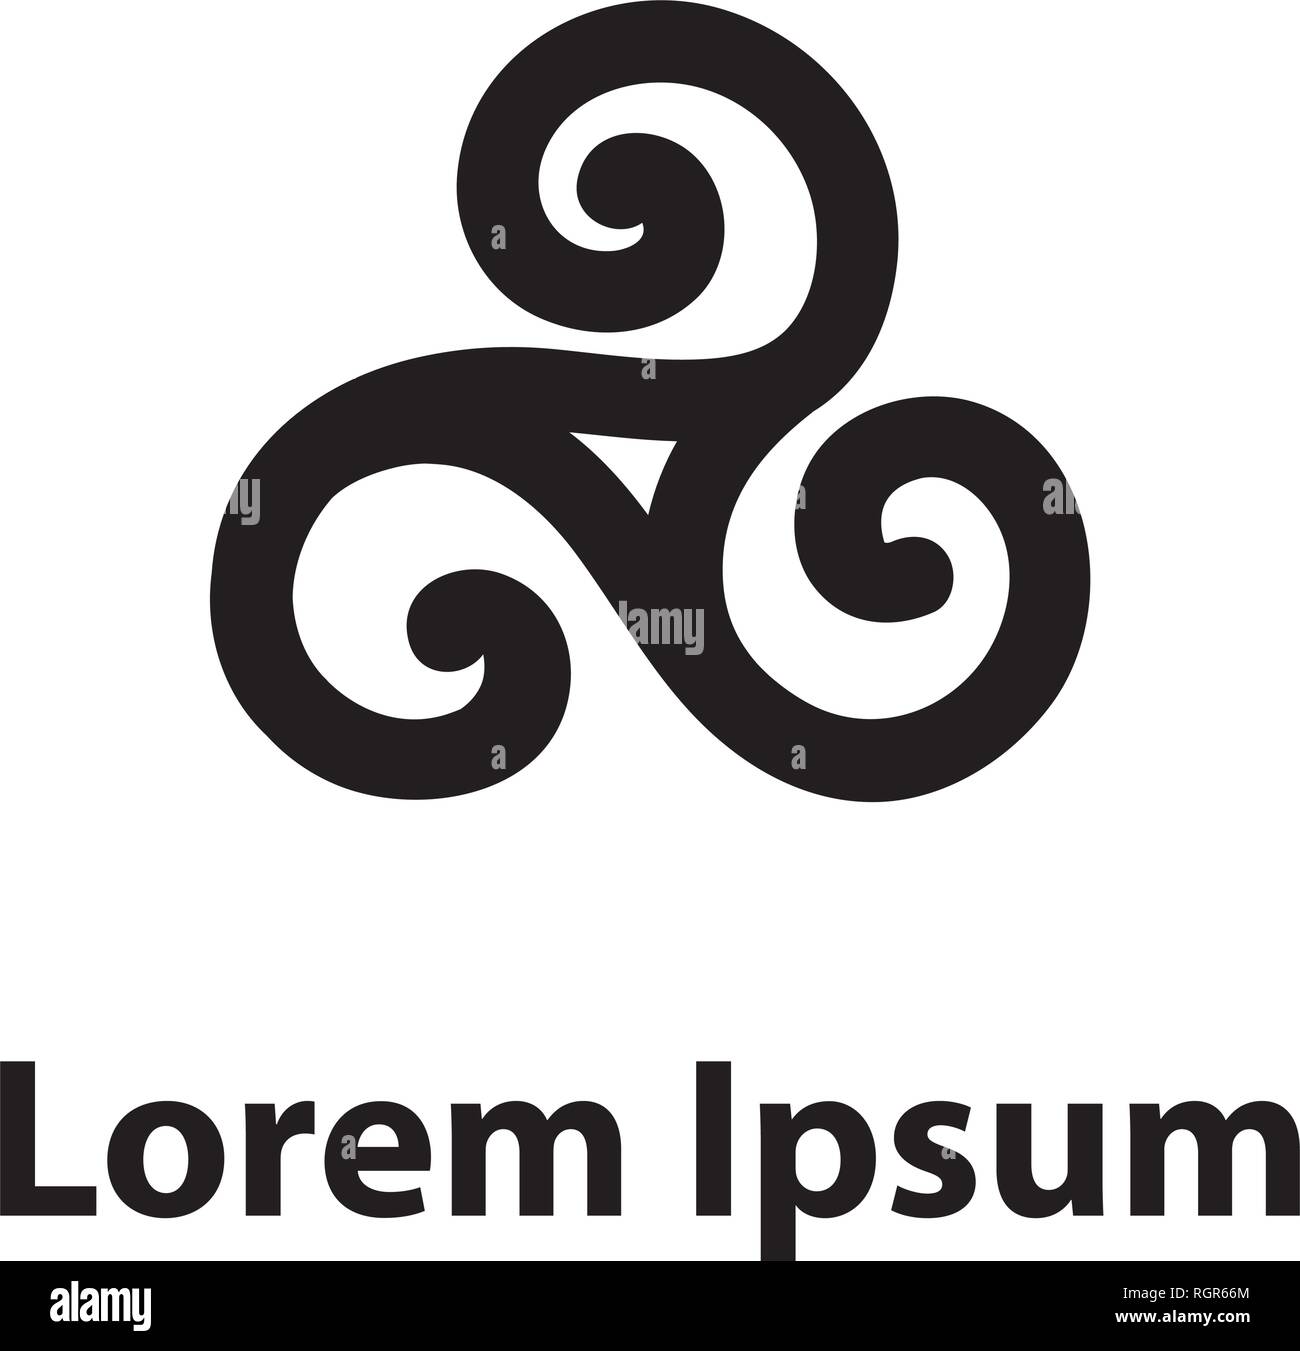 spiral symbol meaning